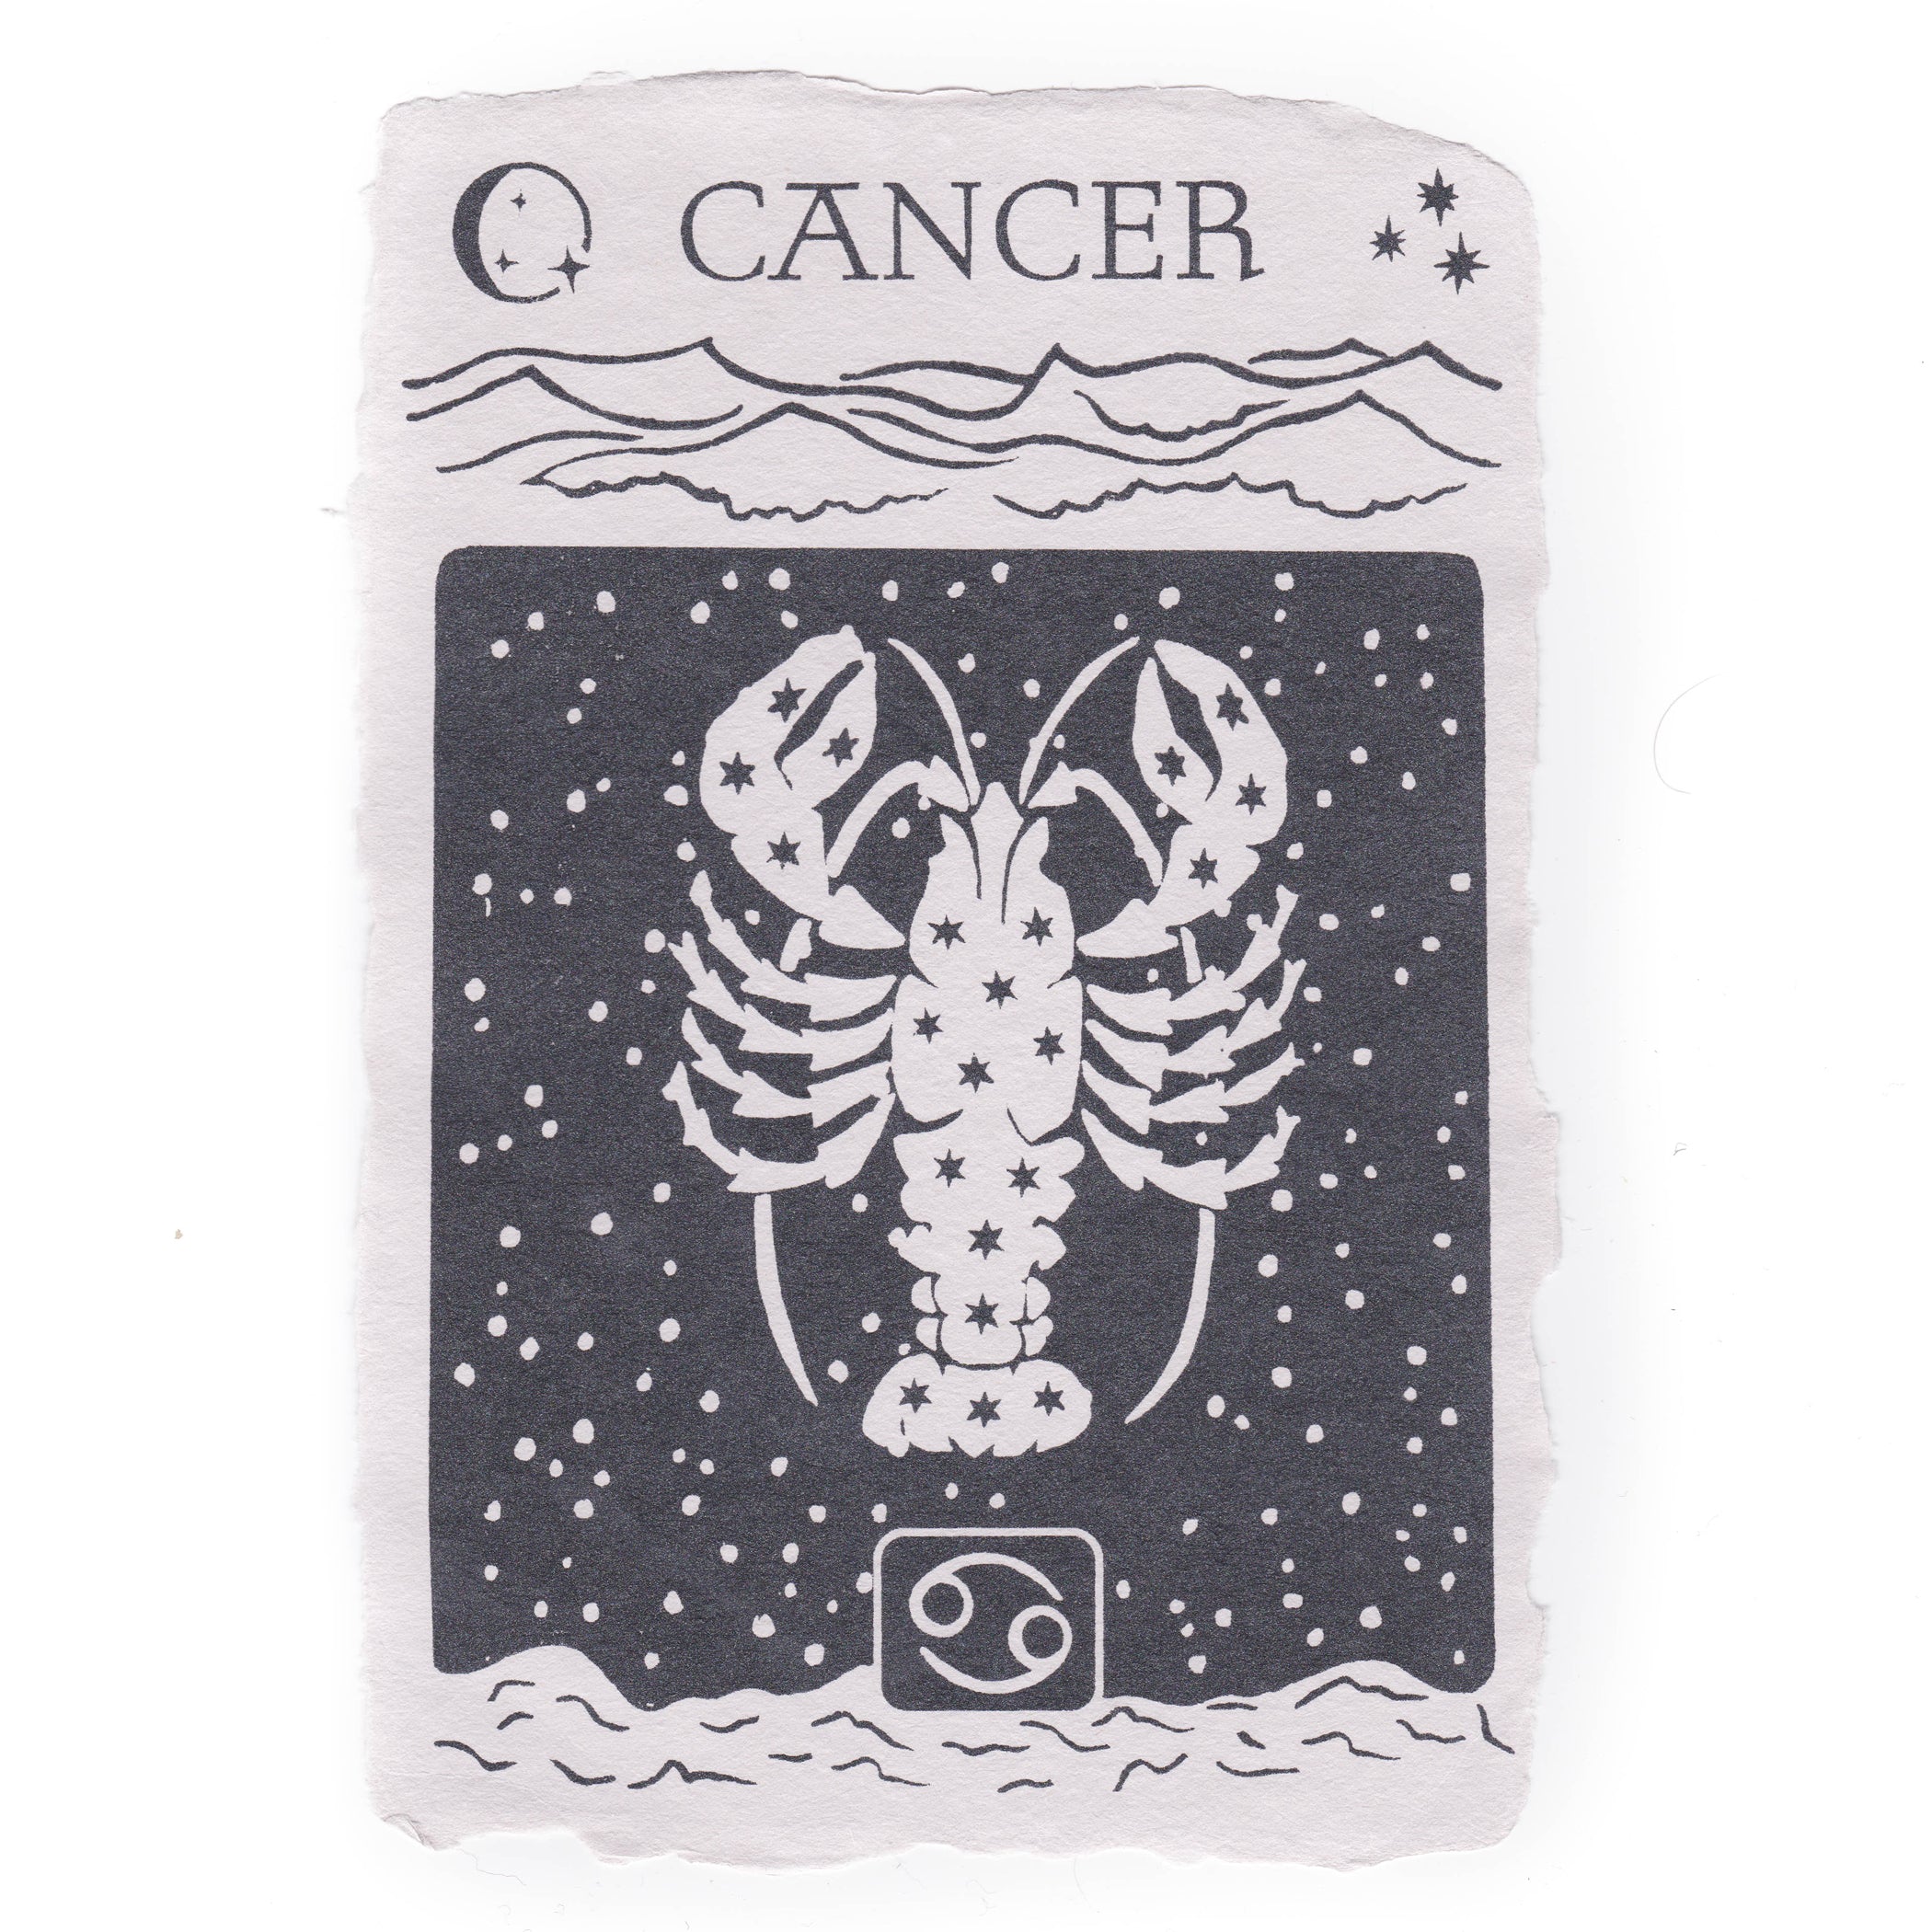 Cancer Notecard